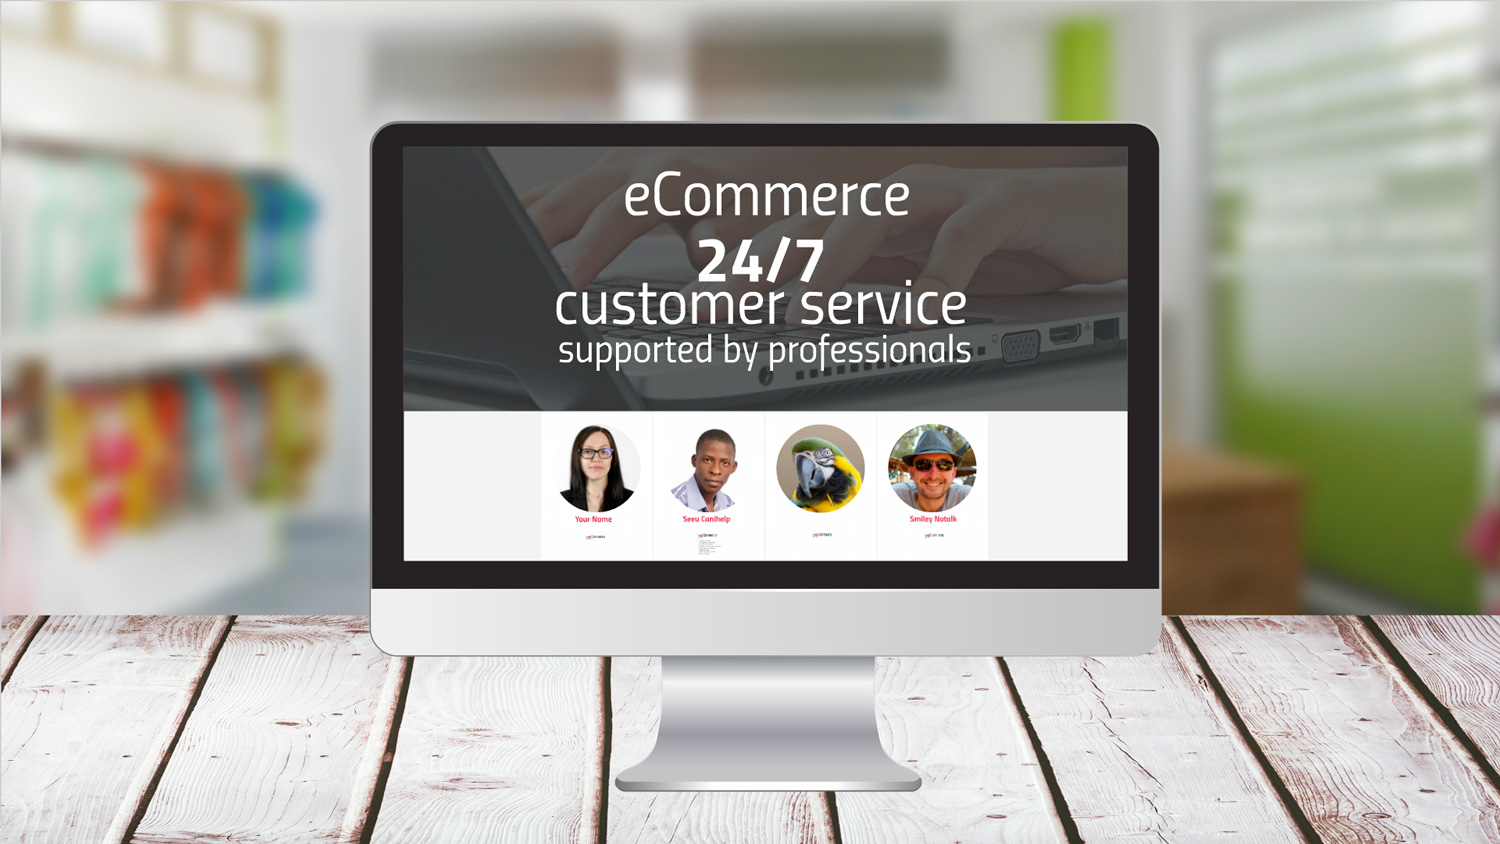 eCommerce Customer Service - Prezi template